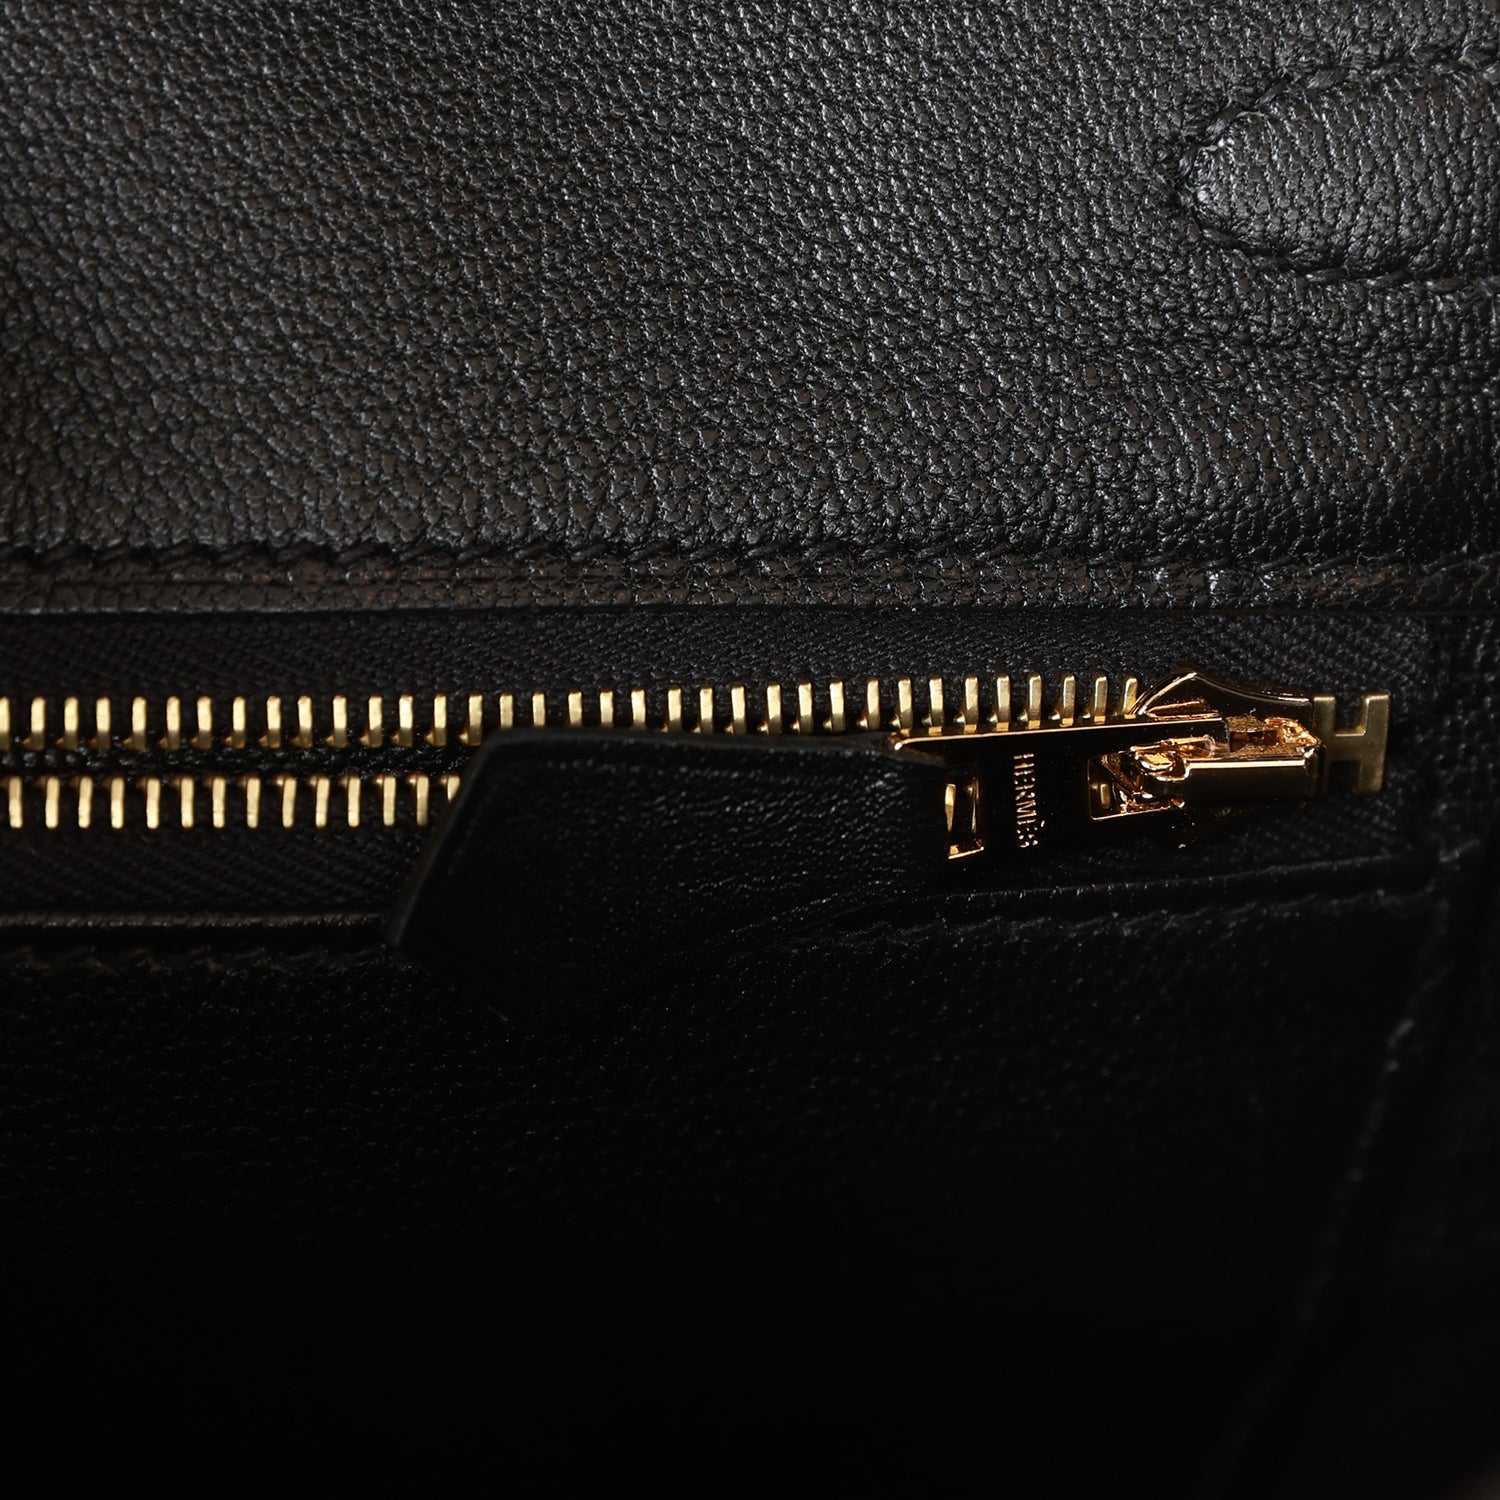 Hermes Birkin 25 Black Tadelakt Gold Hardware – Madison Avenue Couture